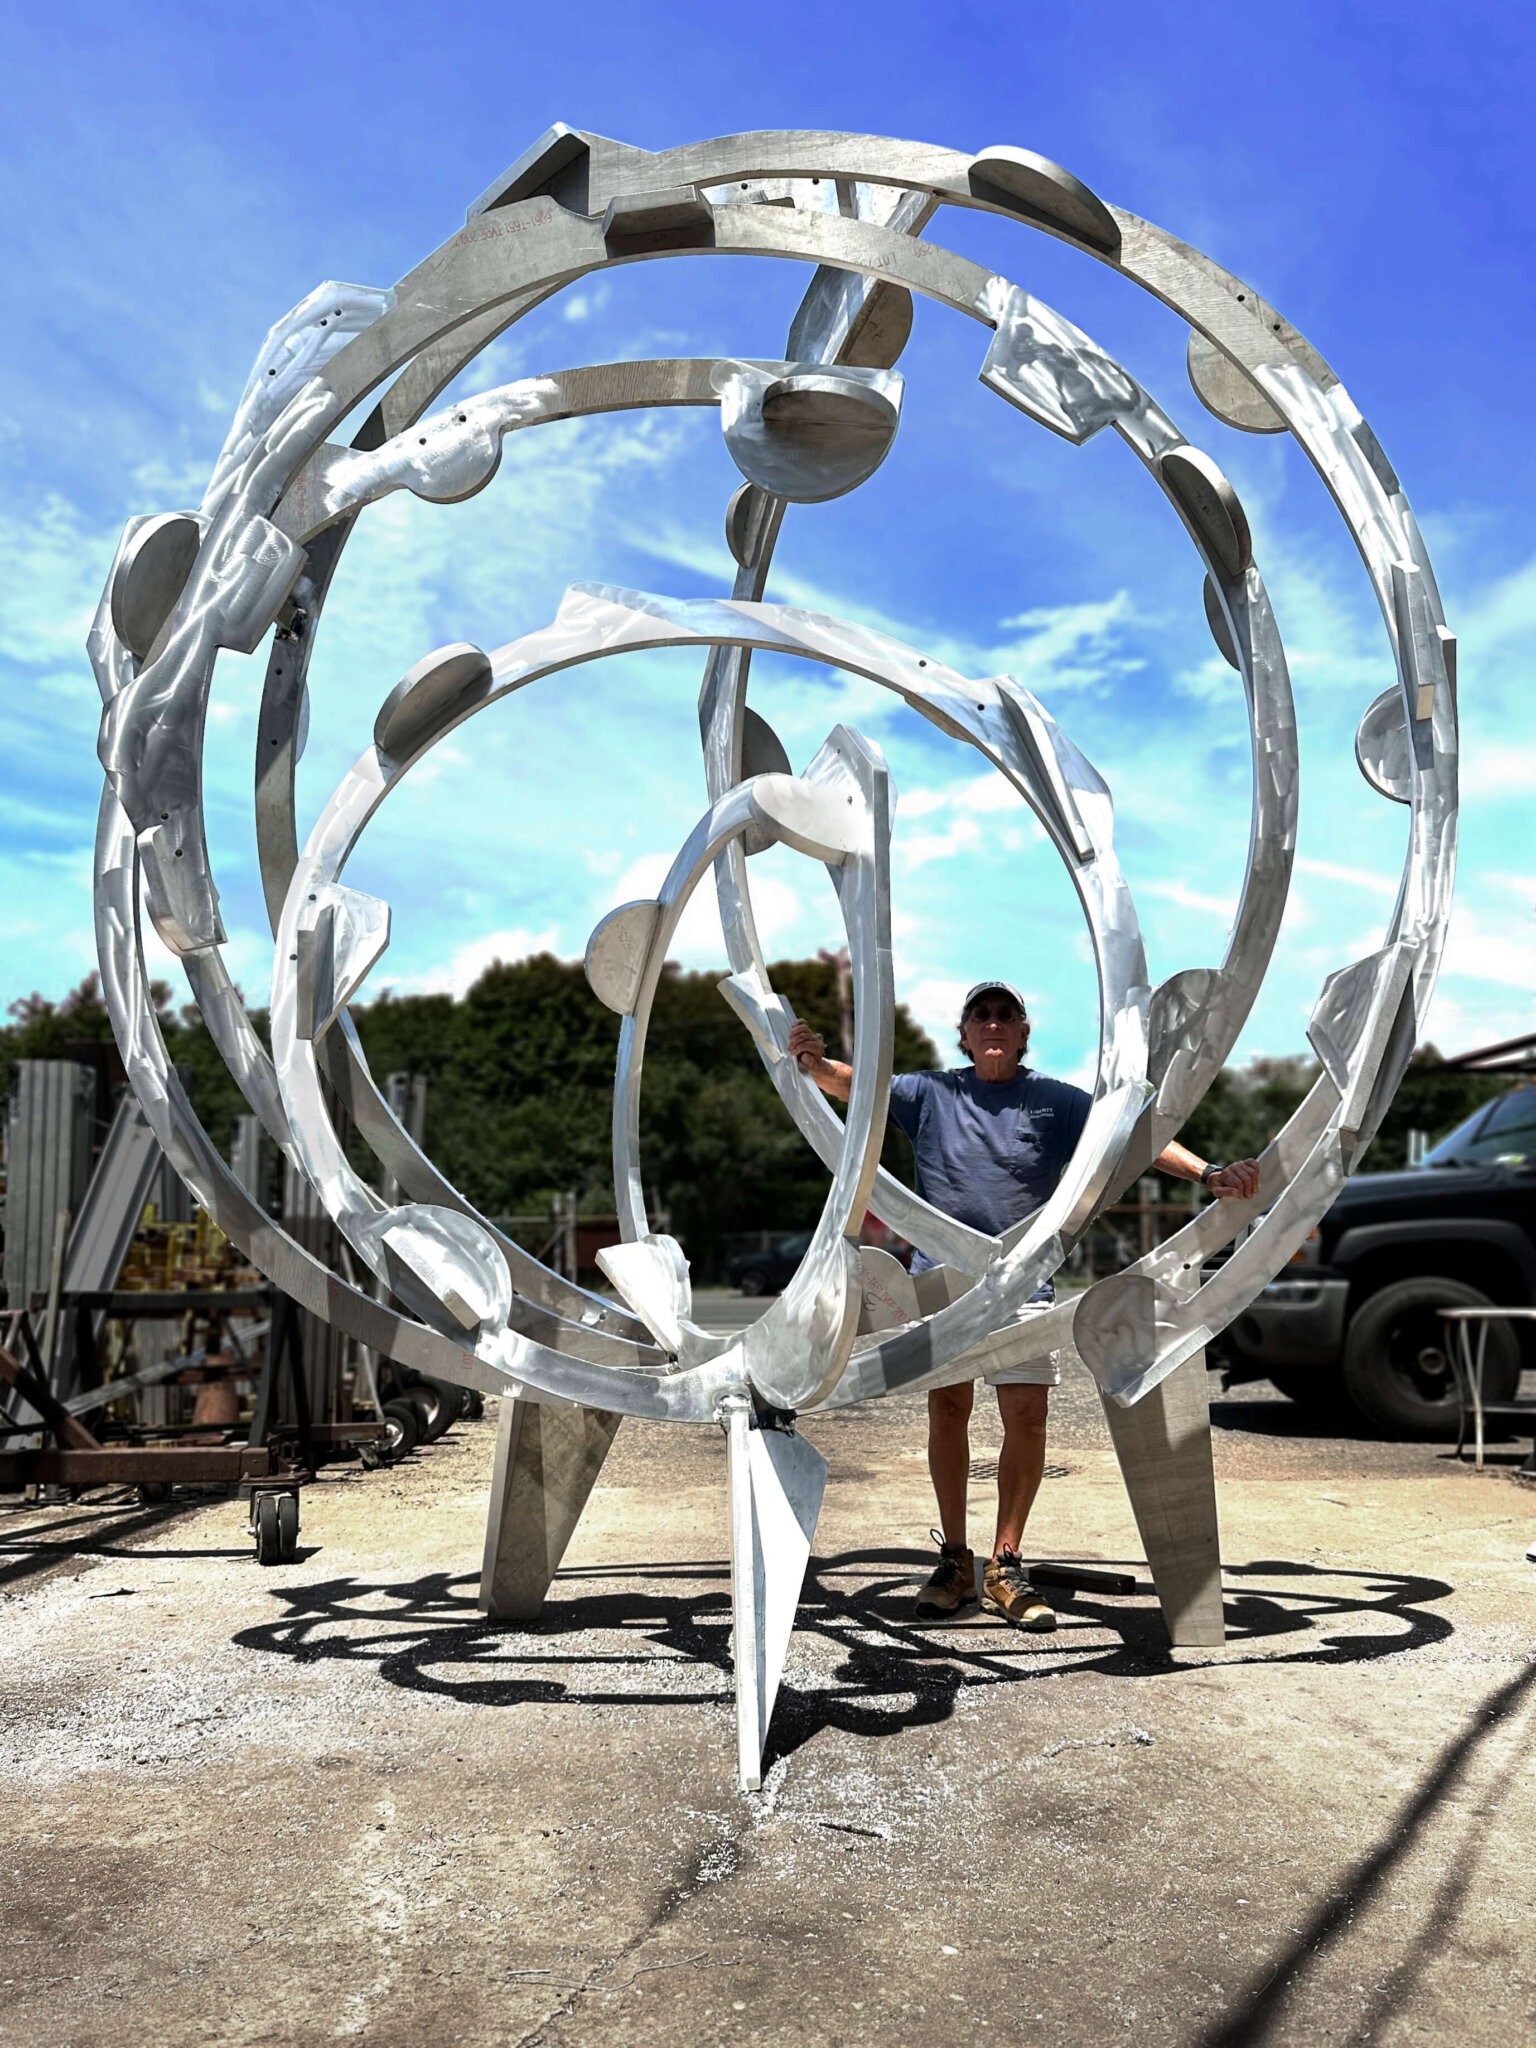 Joel Perlman with his "Texas Turbine" sculpture